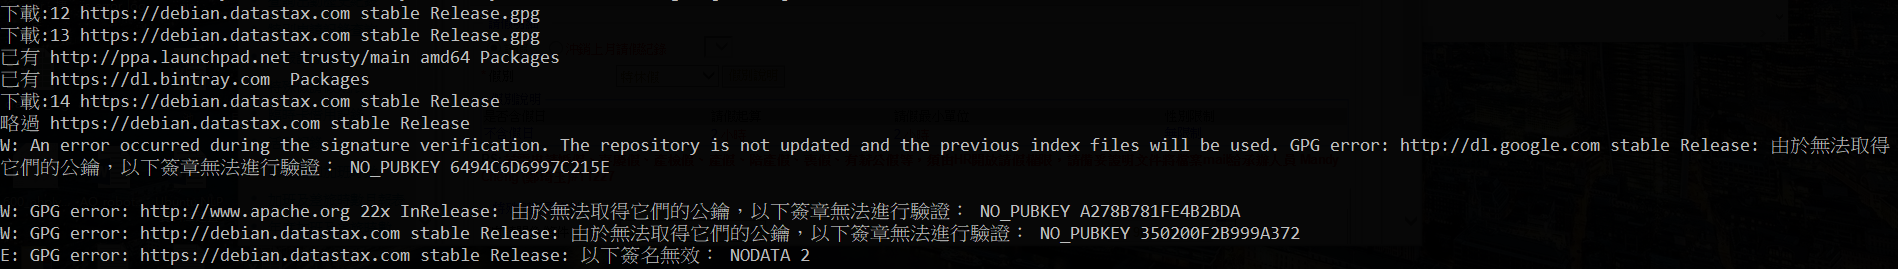 apt_update_error_public_key.png